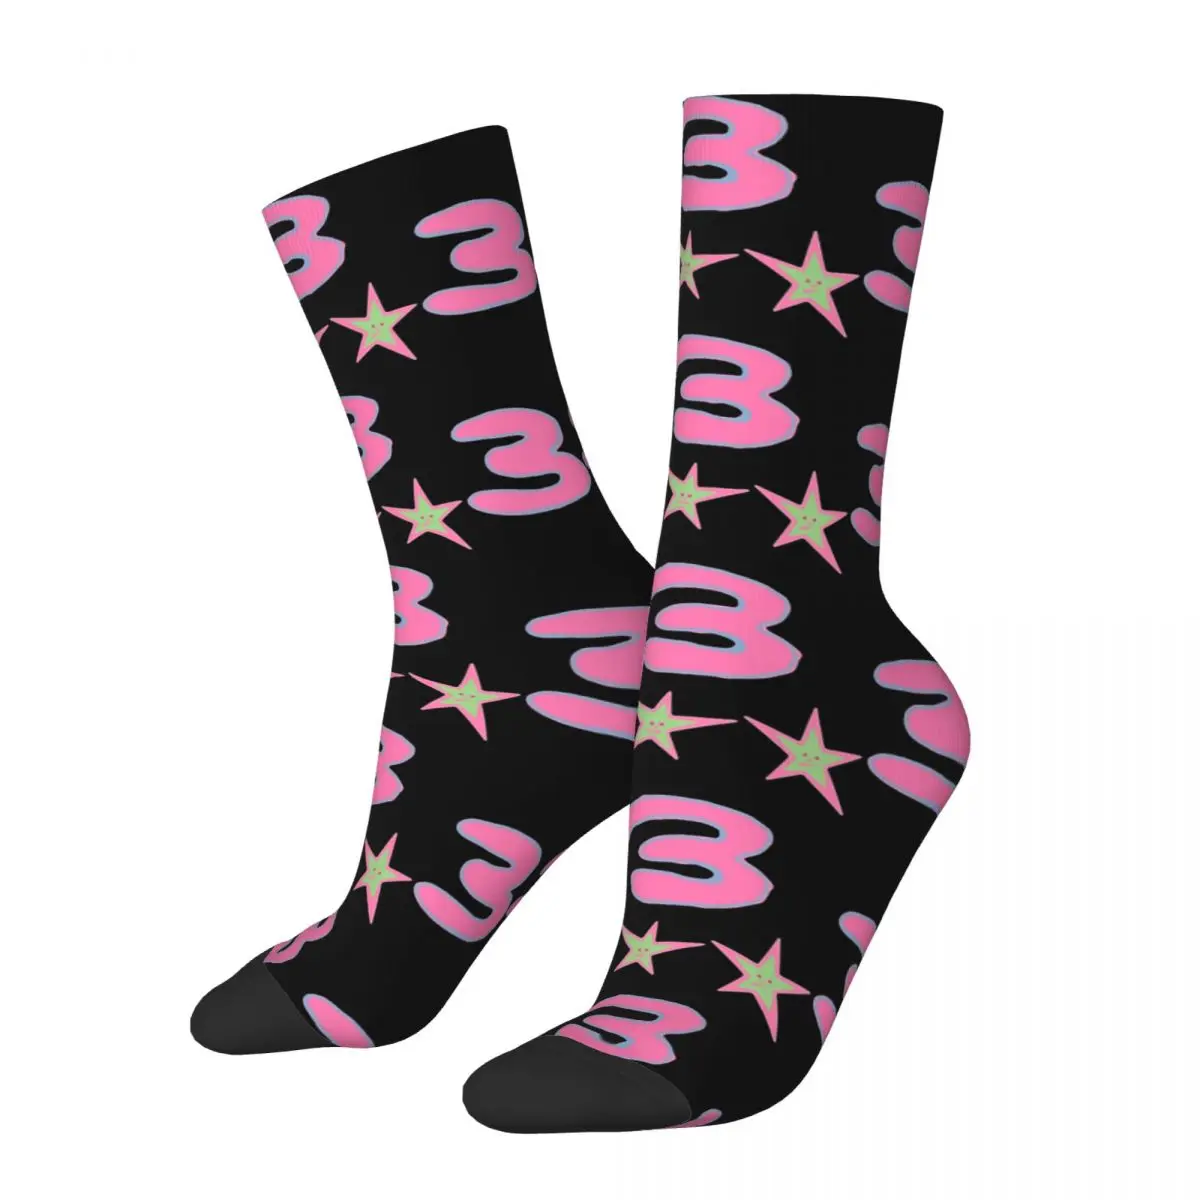 

Bladee 333 Logo Merchandise Crew Socks Cozy hip hop rapper Skateboard Crew Stockings Cute for Unisex Gift Idea